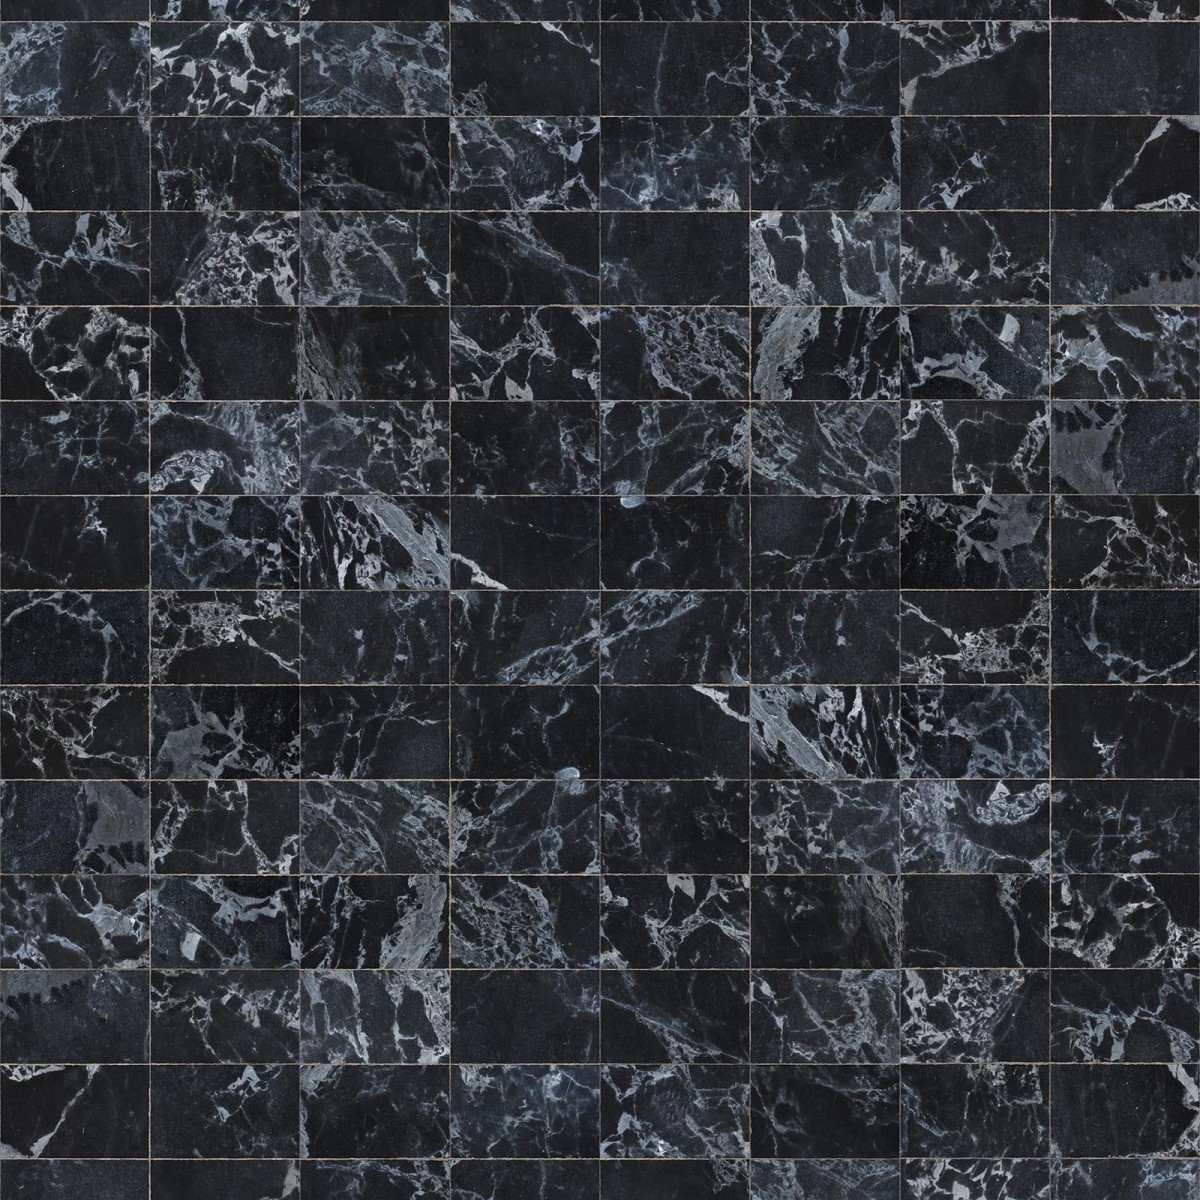 Tapet designer Materials Marble, Tiles 24.4x15.4cm, Black by Piet Hein Eek, NLXL, 4.9mp / rola, Tapet Exclusivist 